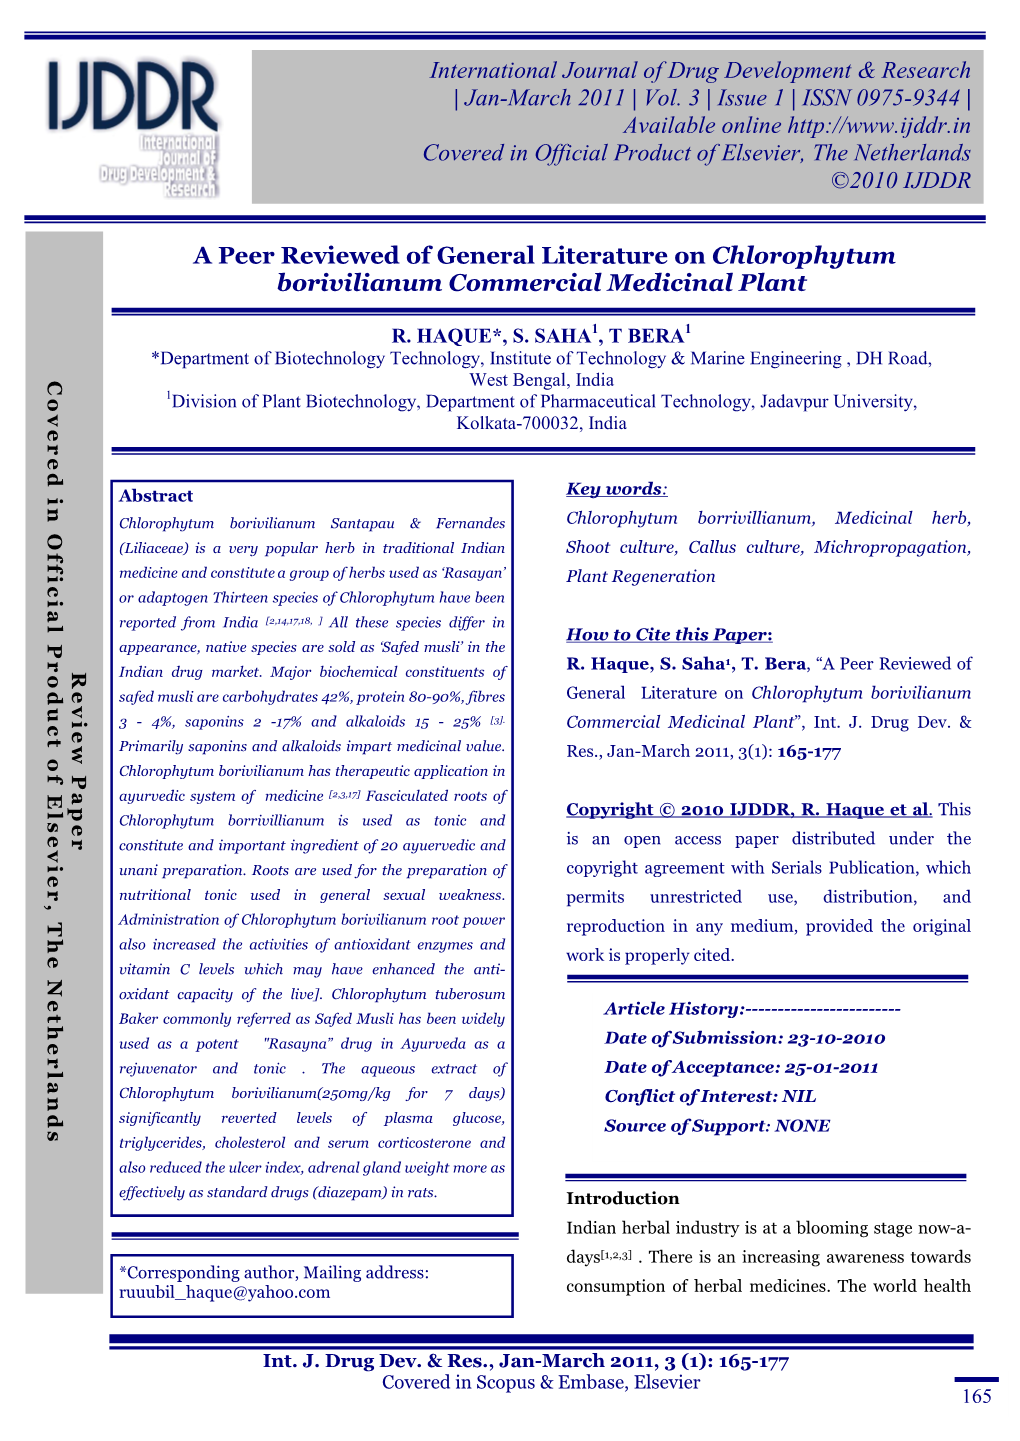 A Peer Reviewed of General Literature on Chlorophytum Borivilianum Commercial Medicinal Plant